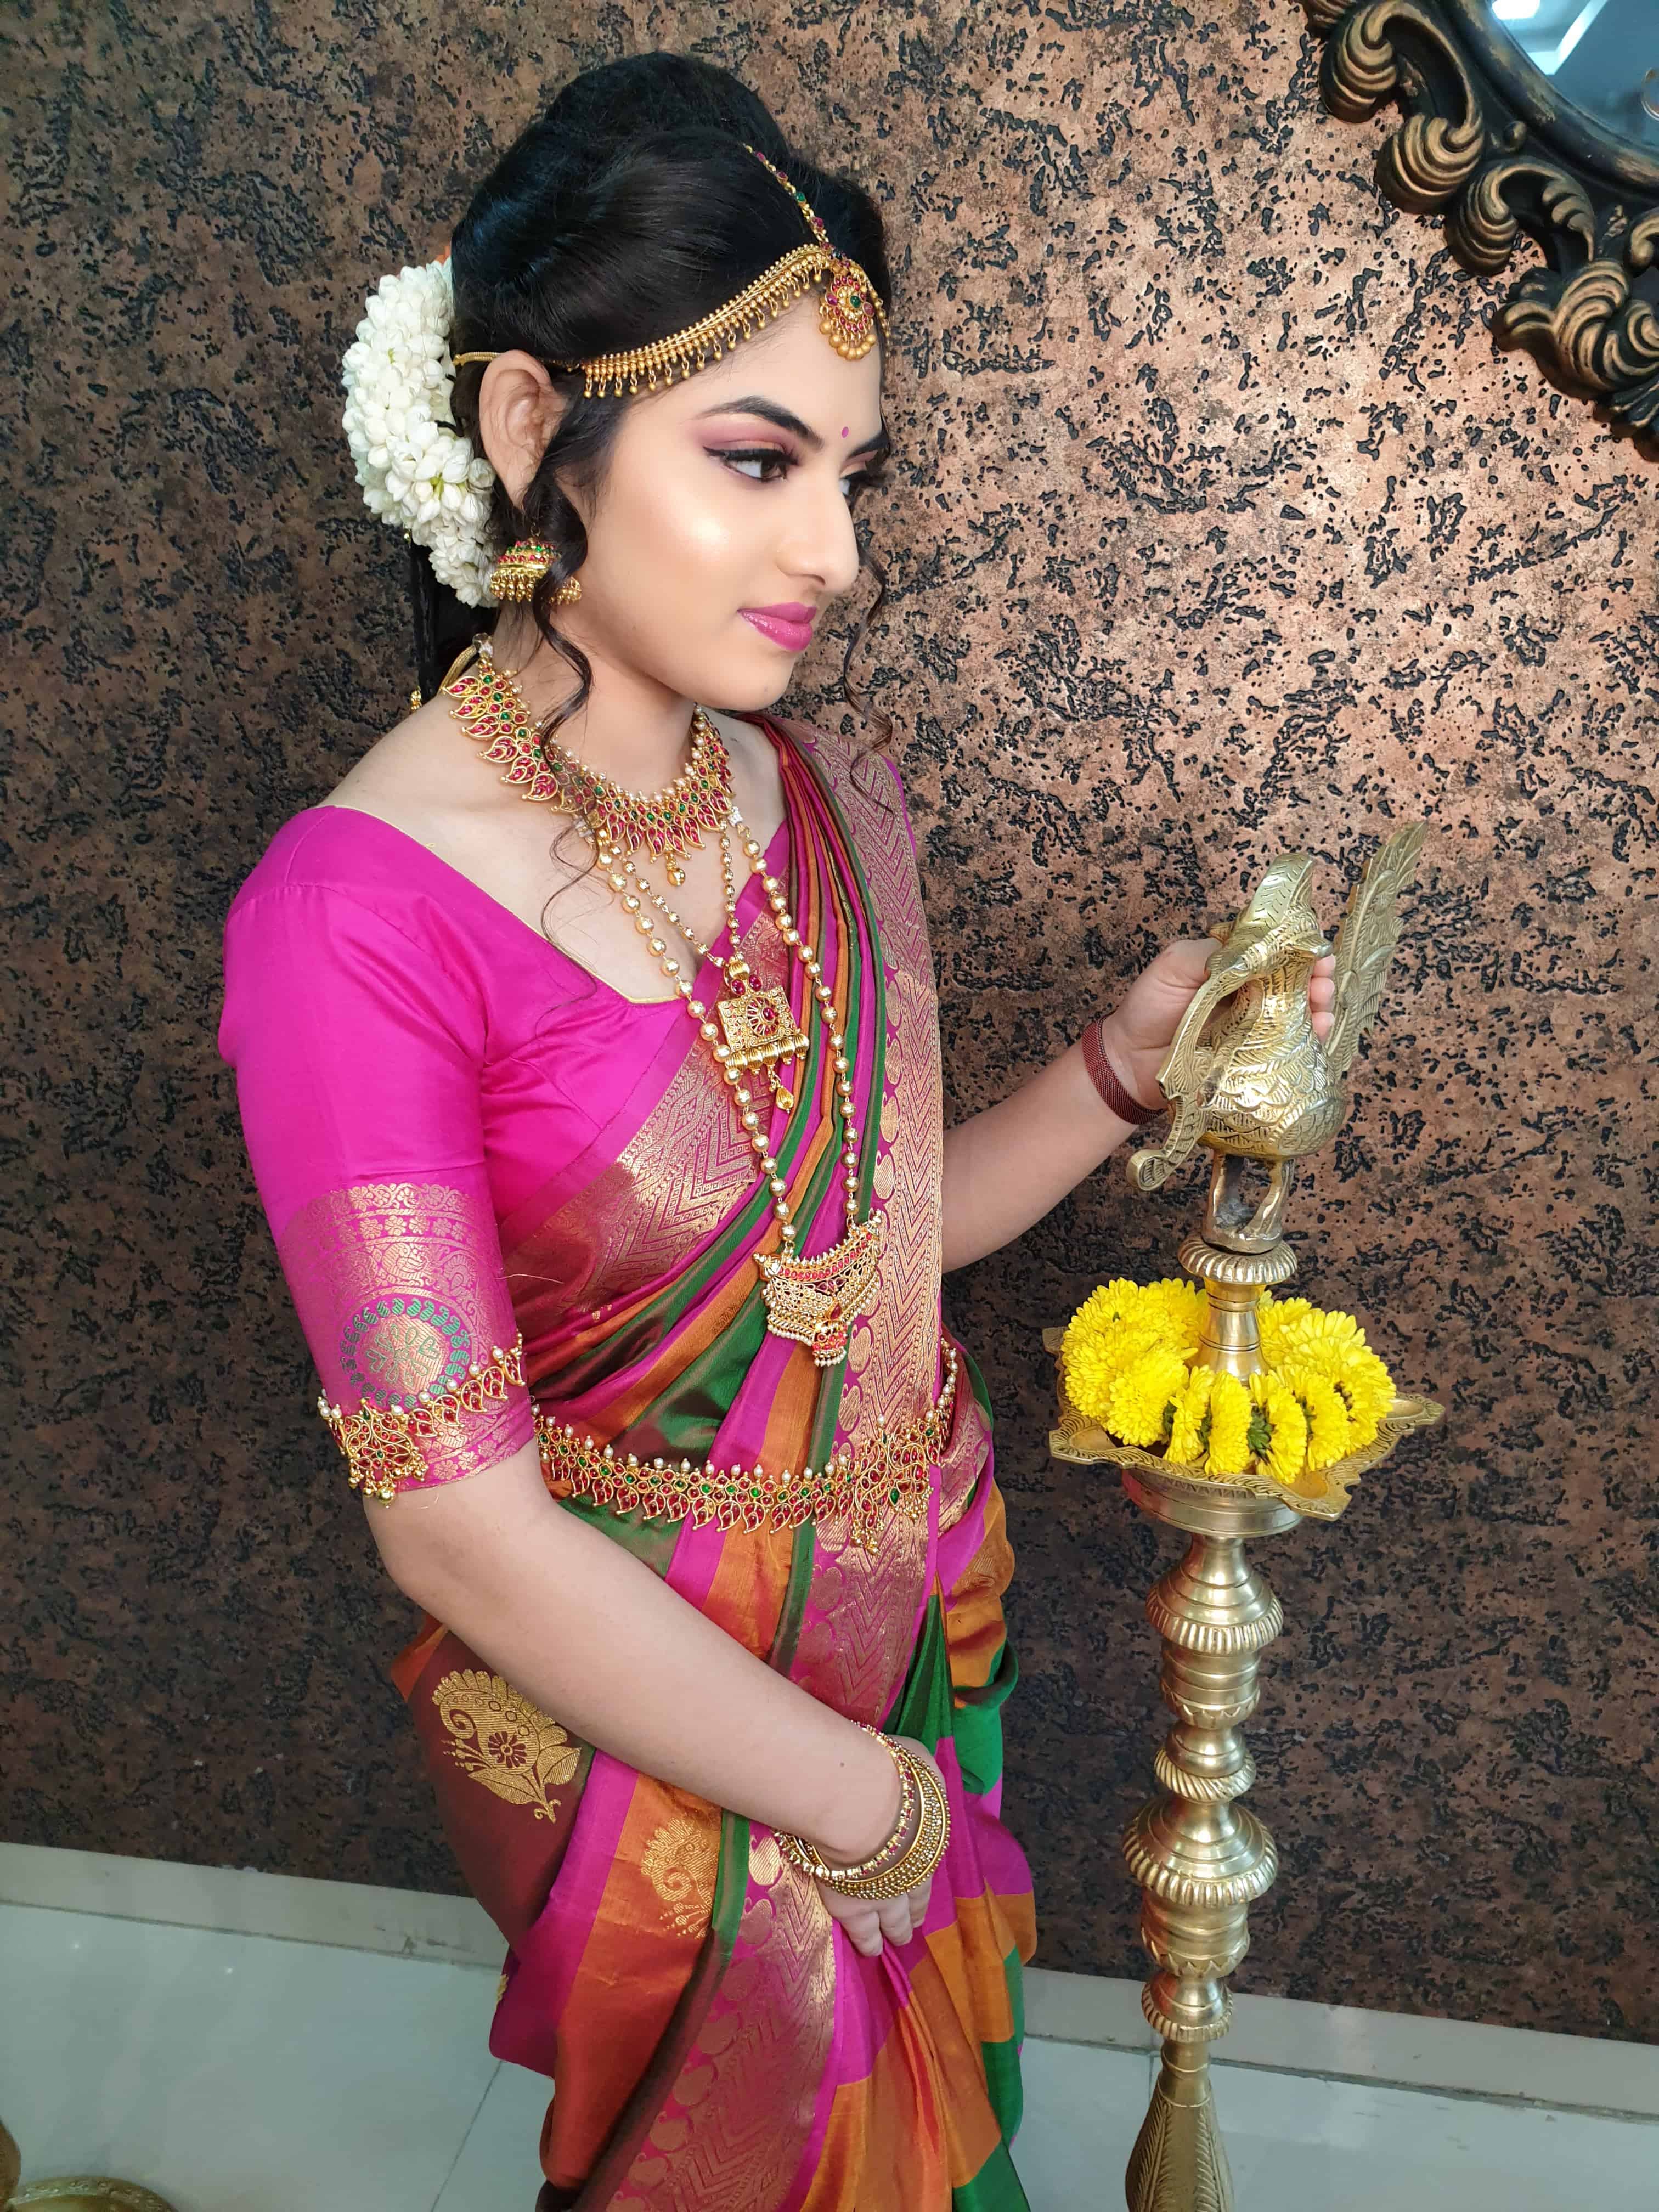 rashmi-makeup-artist-bangalore